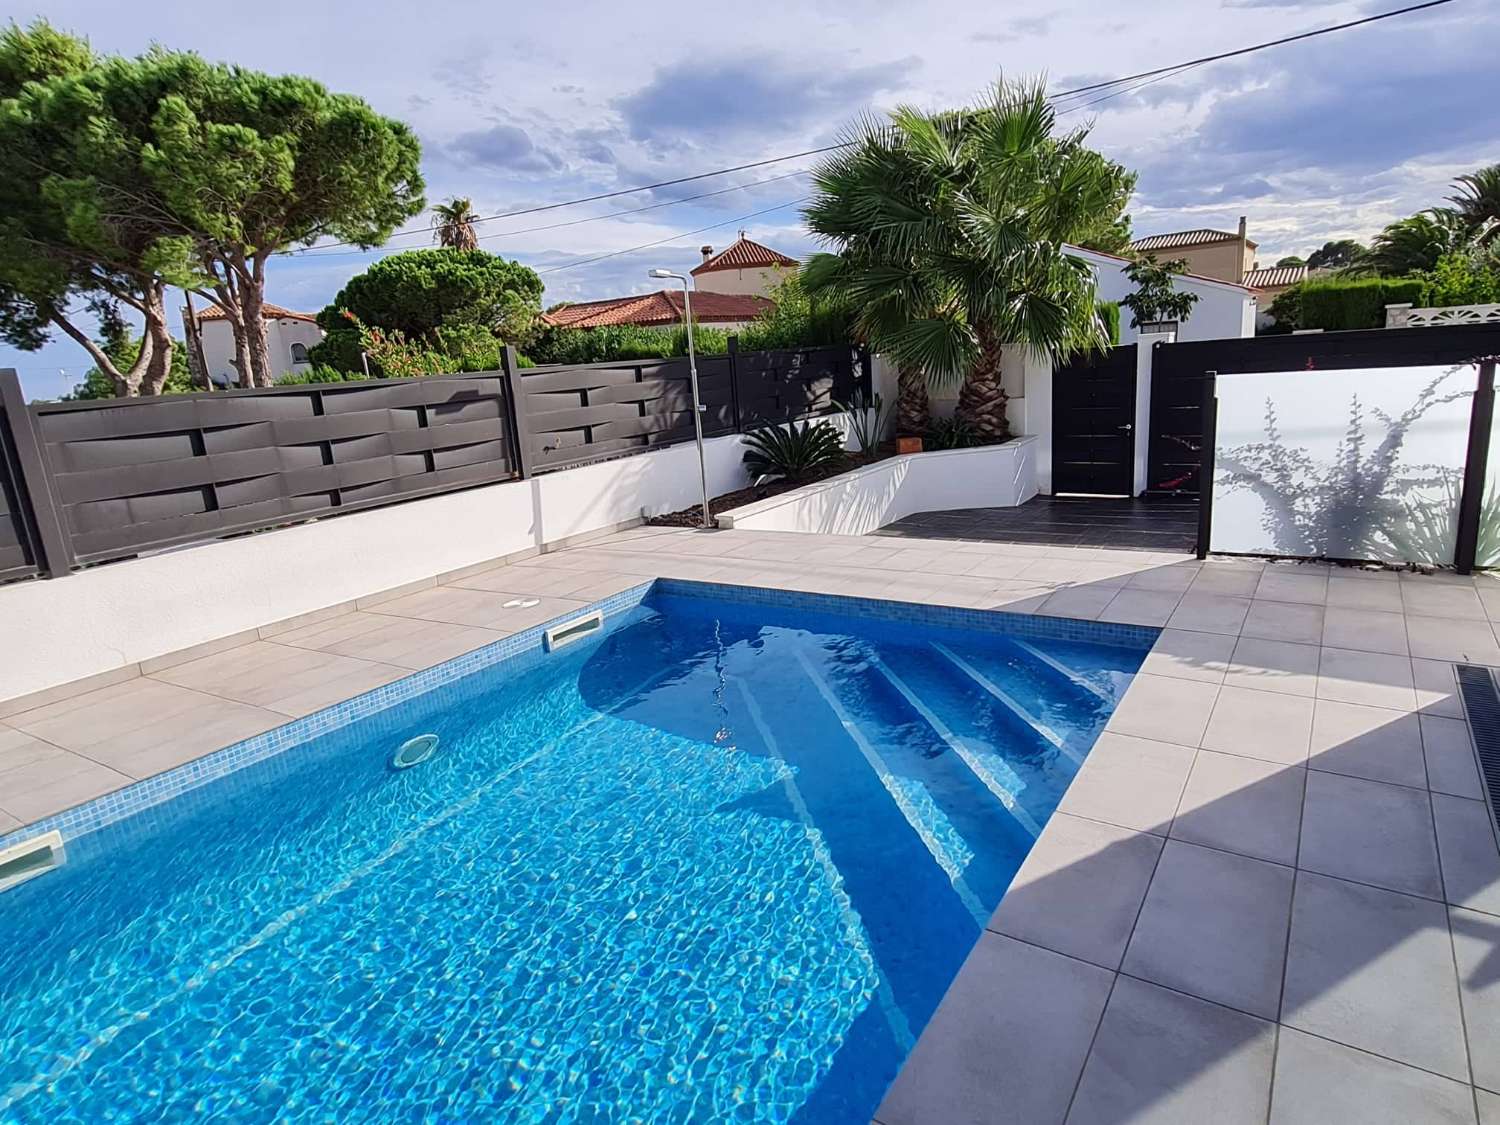 Preciosa casa moderna amb piscina privada